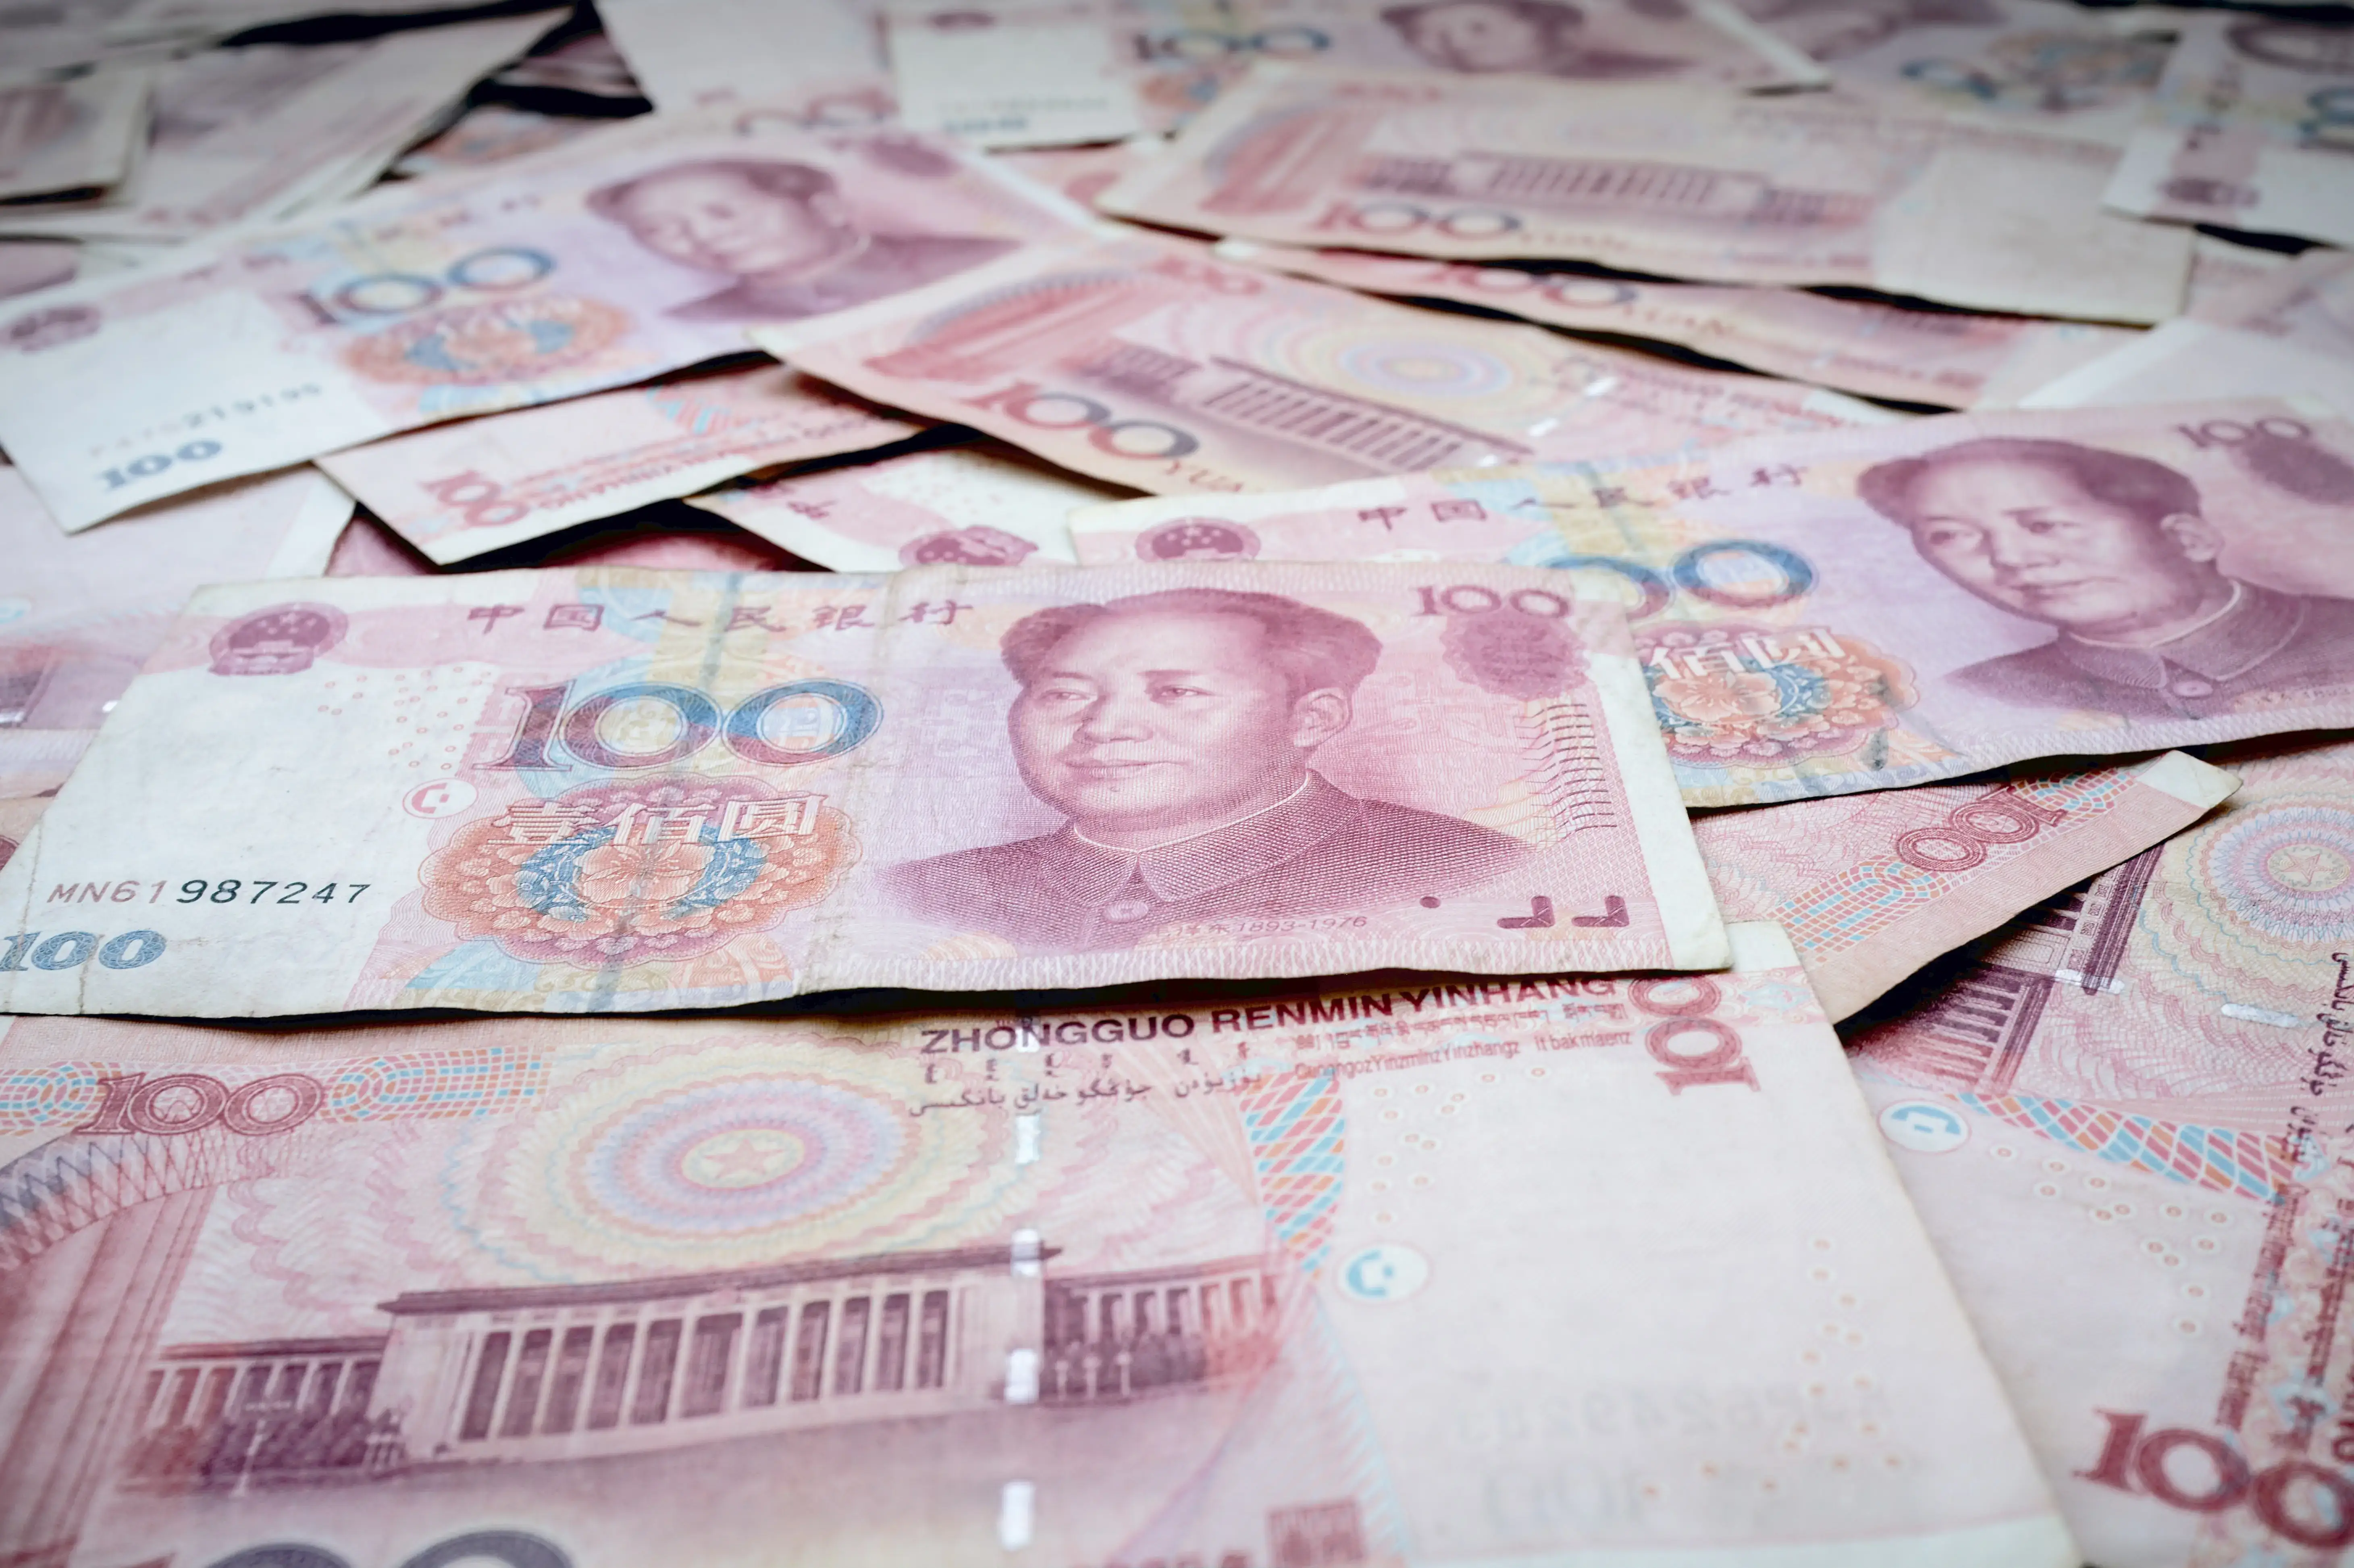 A close-up of a pile of 100 yuan bills